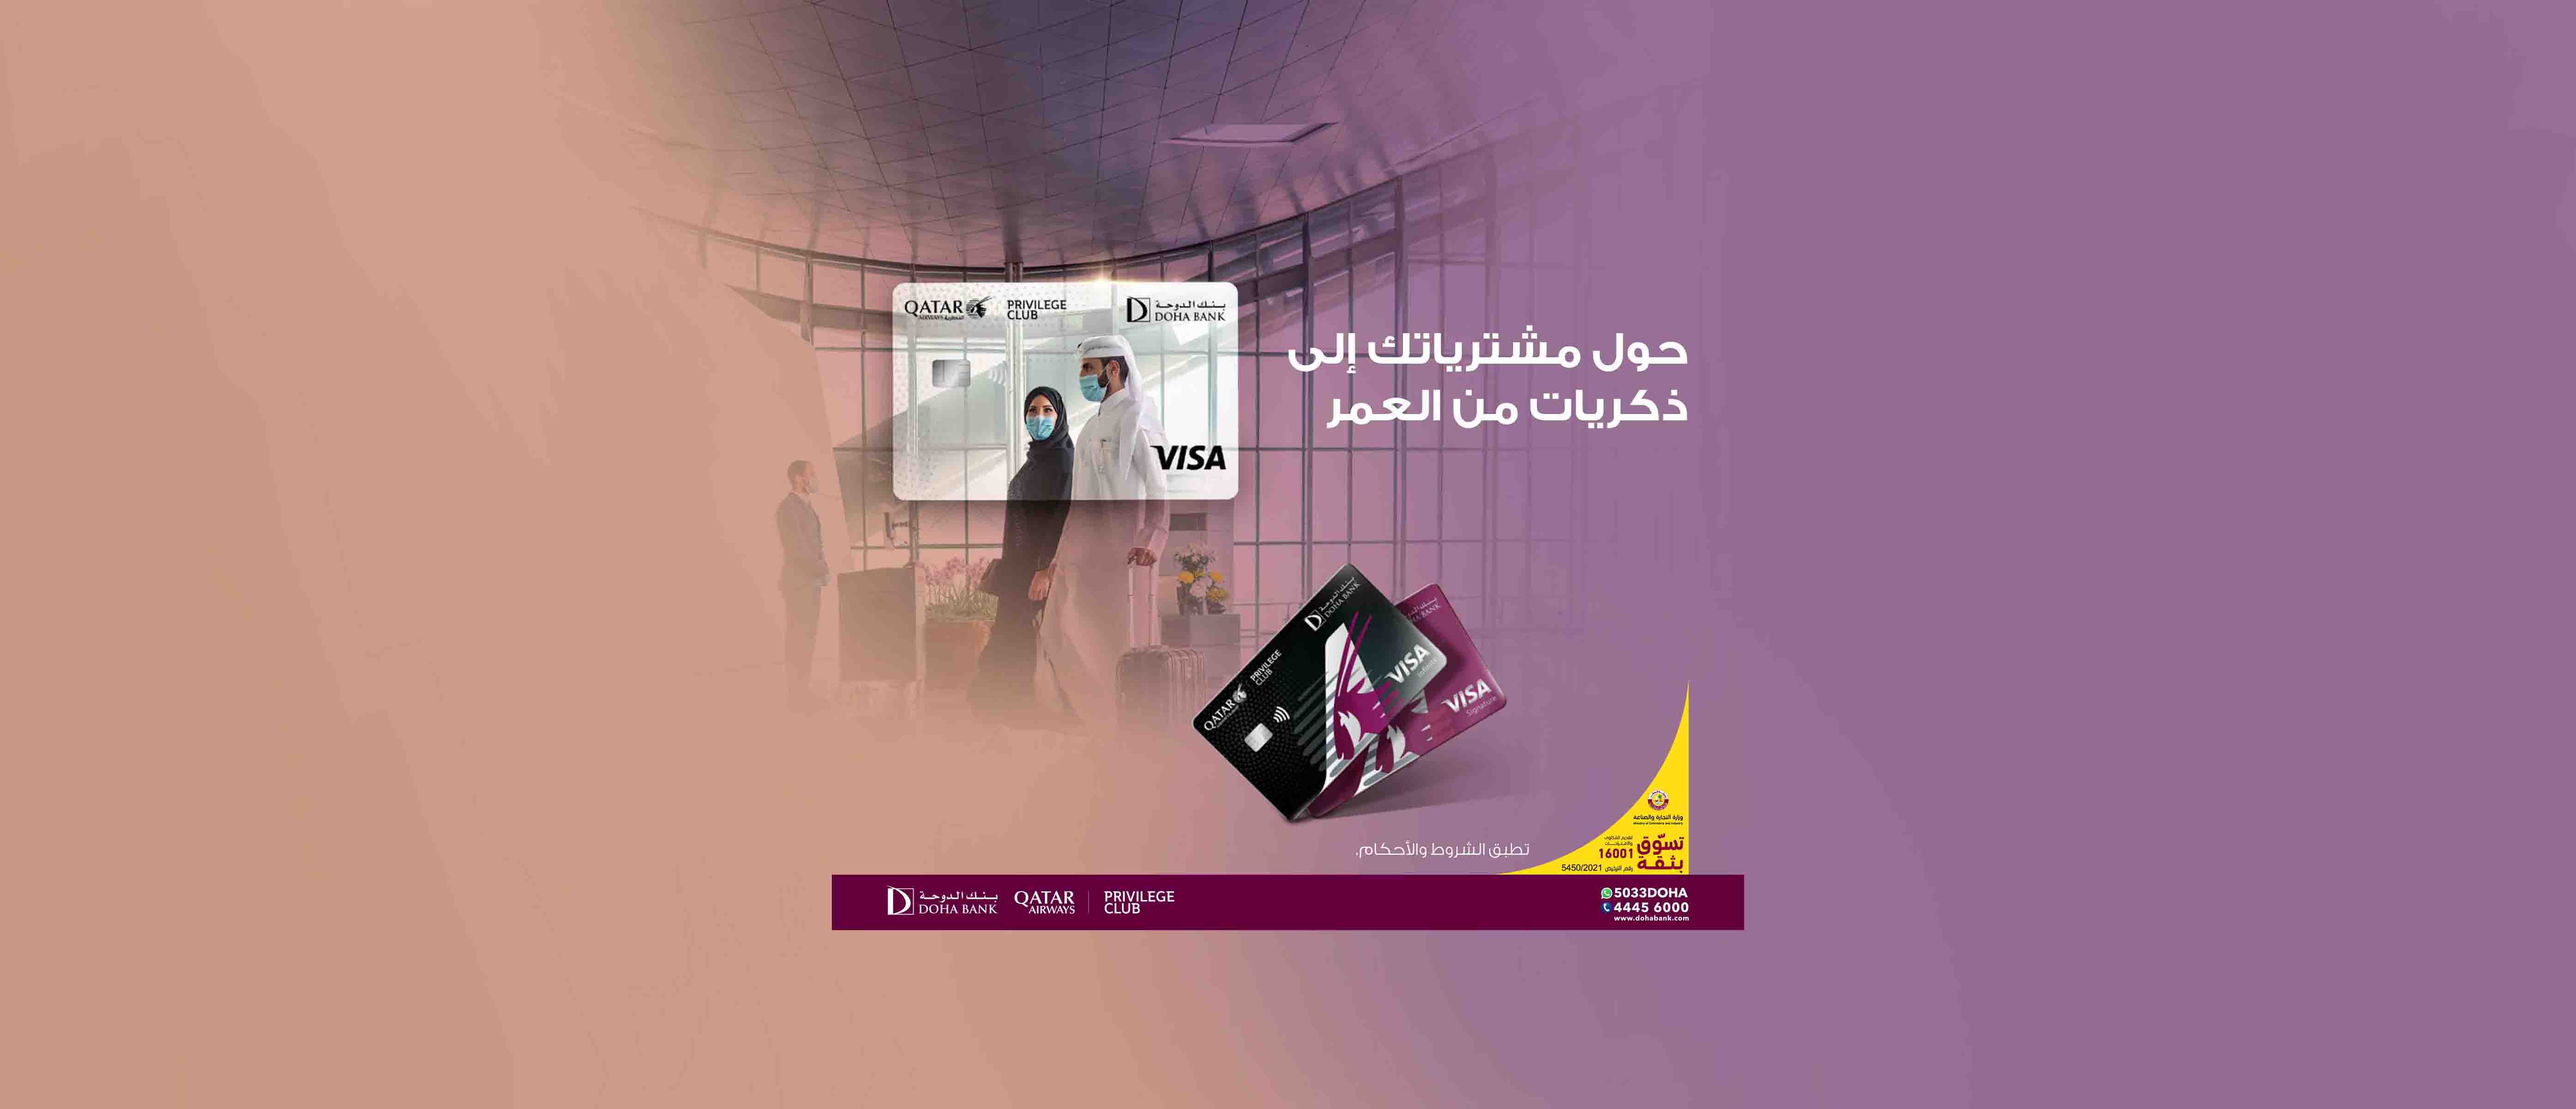 Qatar Airways Privilege Club Card